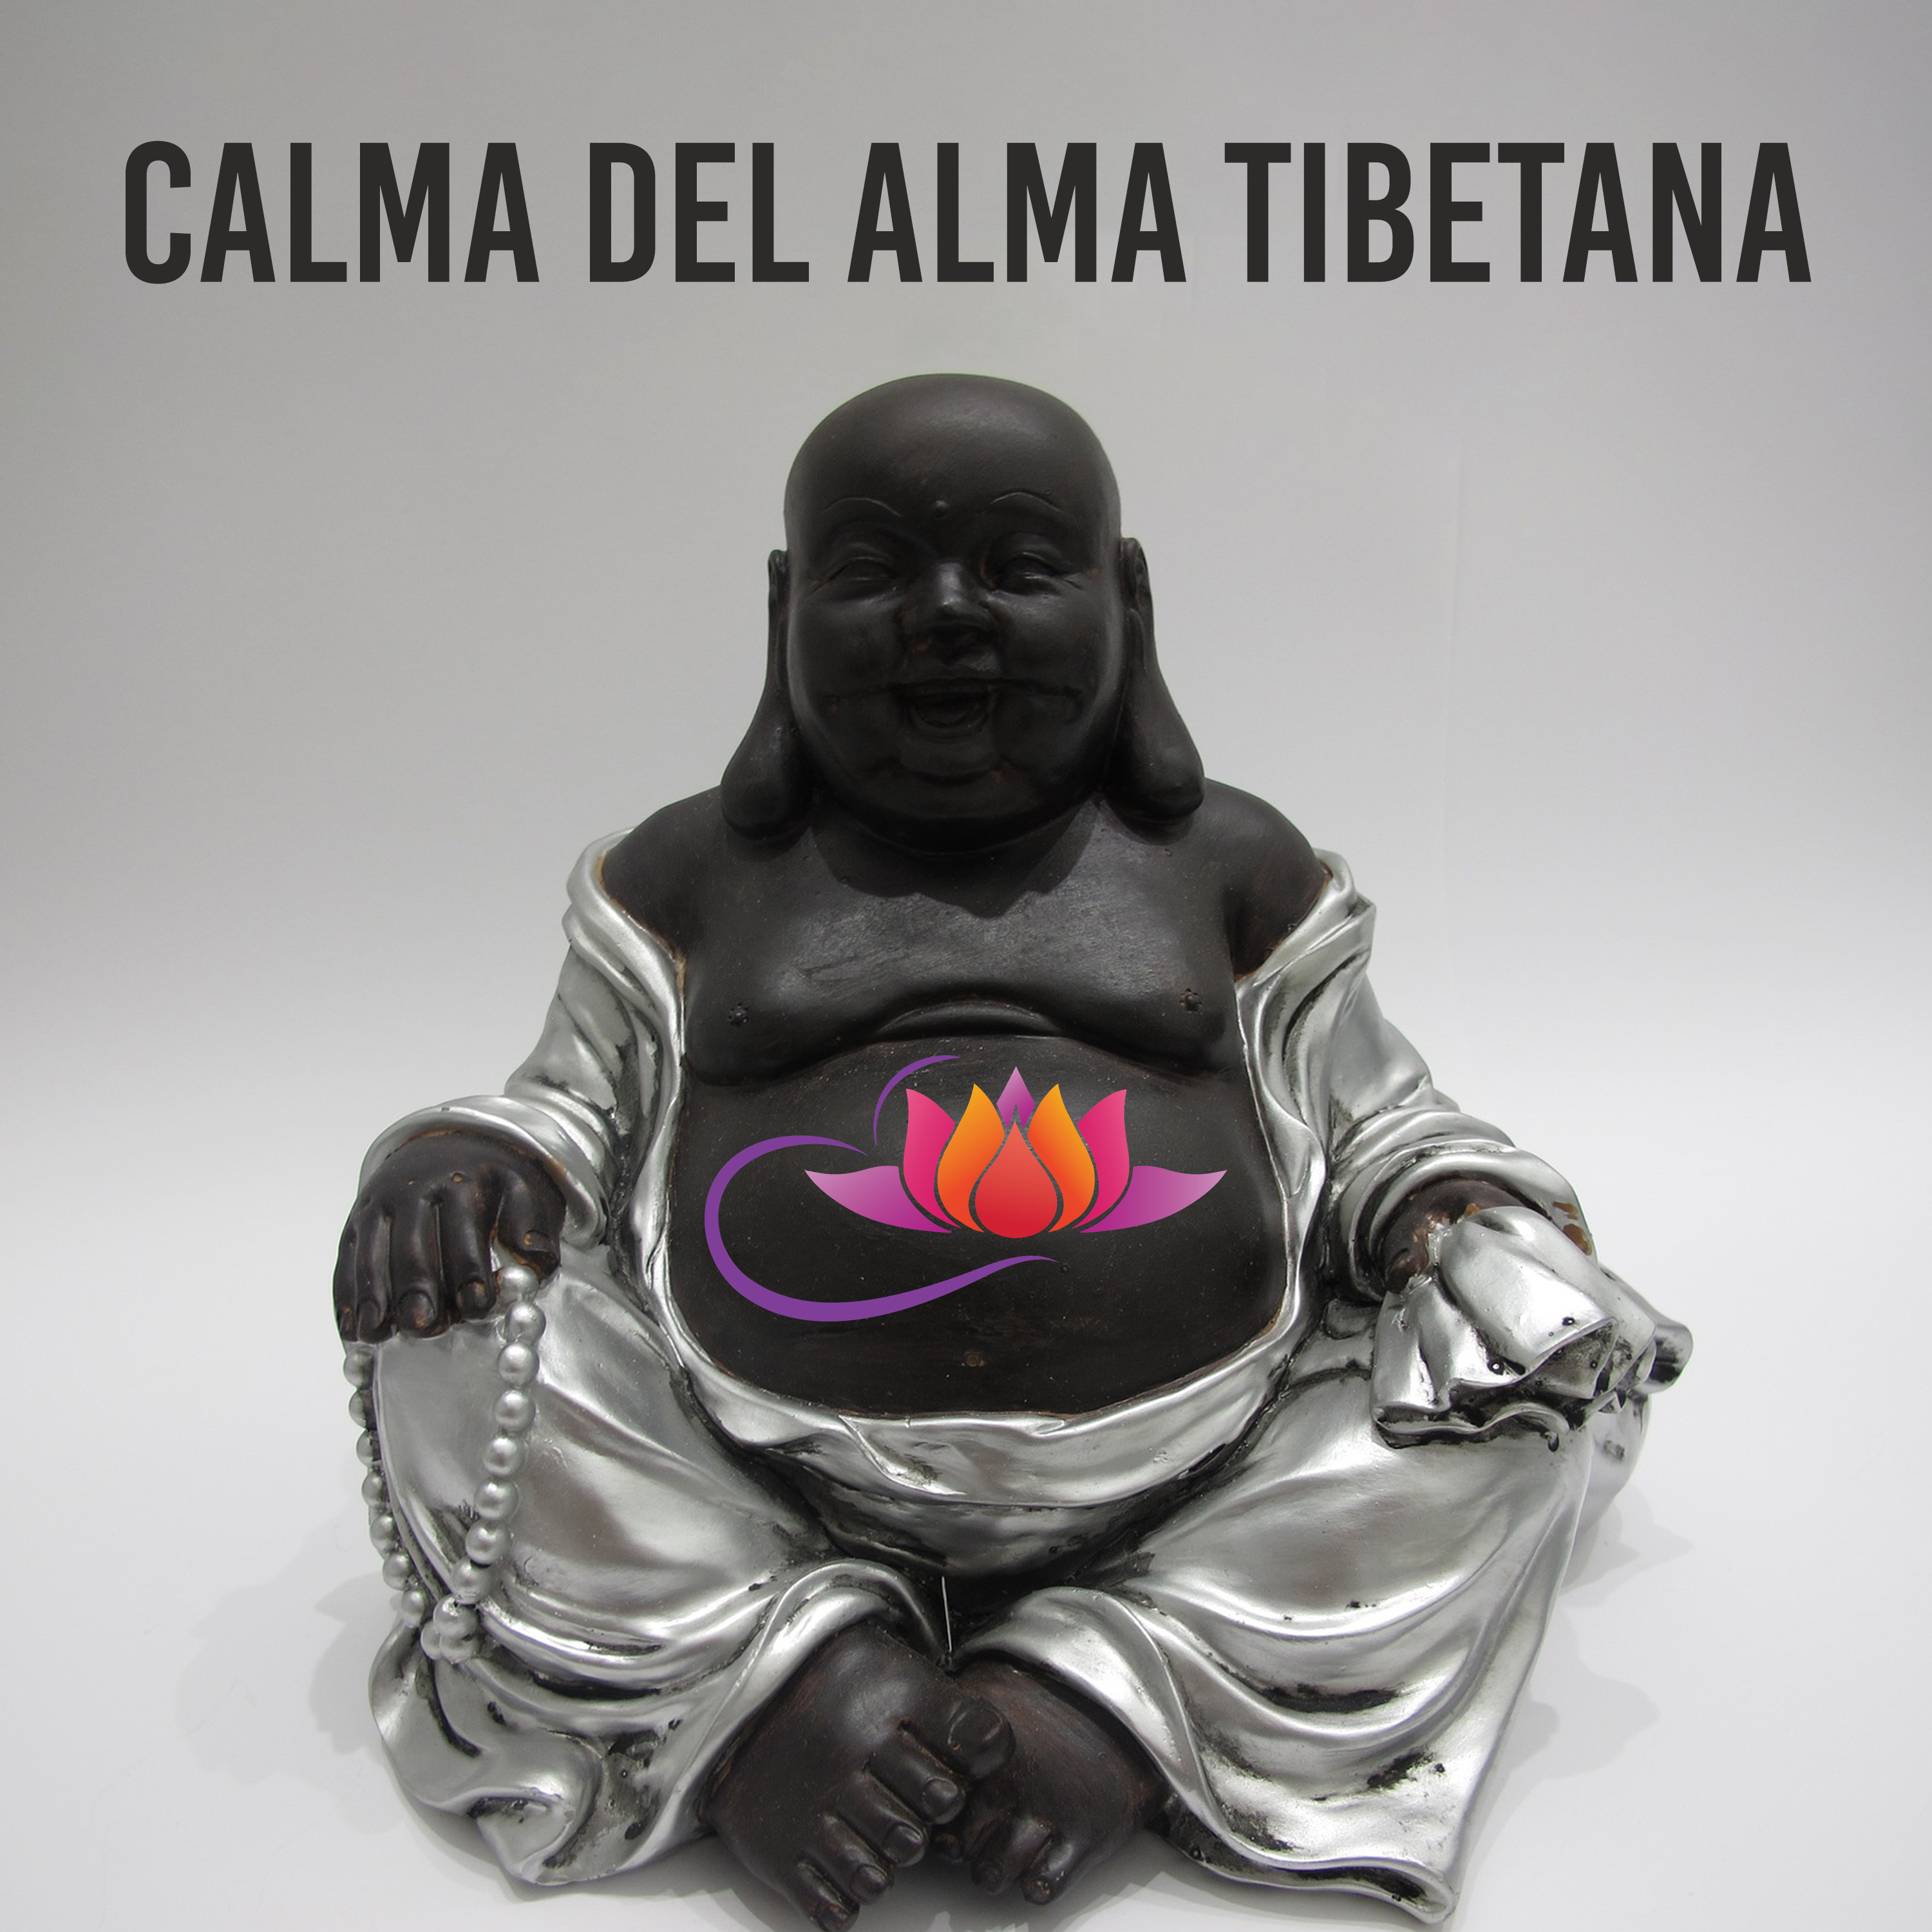 Calma del alma tibetana  Santuario de meditacio n, Mi stico zen, Despertar del espi ritu, Cuencos de reflexio n, Mantra budista